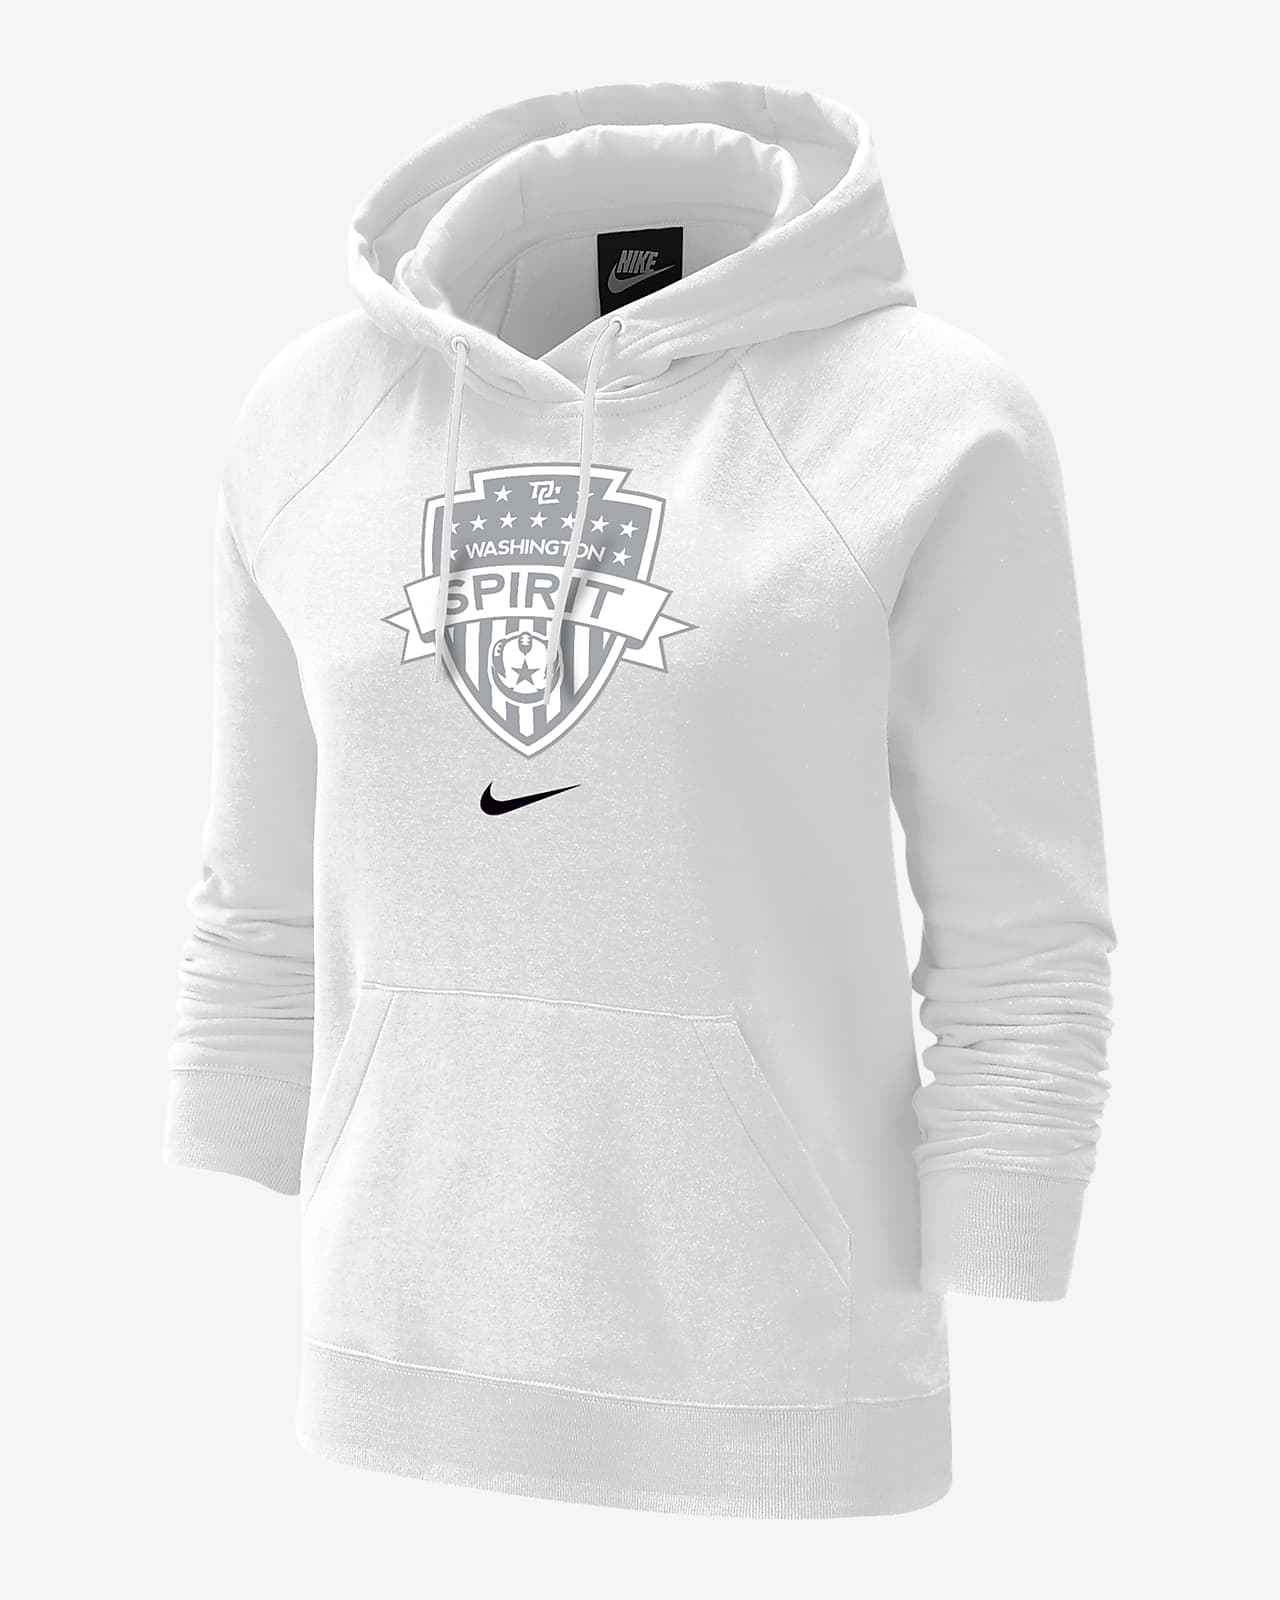 Washington Spirit Women's Nike Soccer Varsity Fleece Hoodie